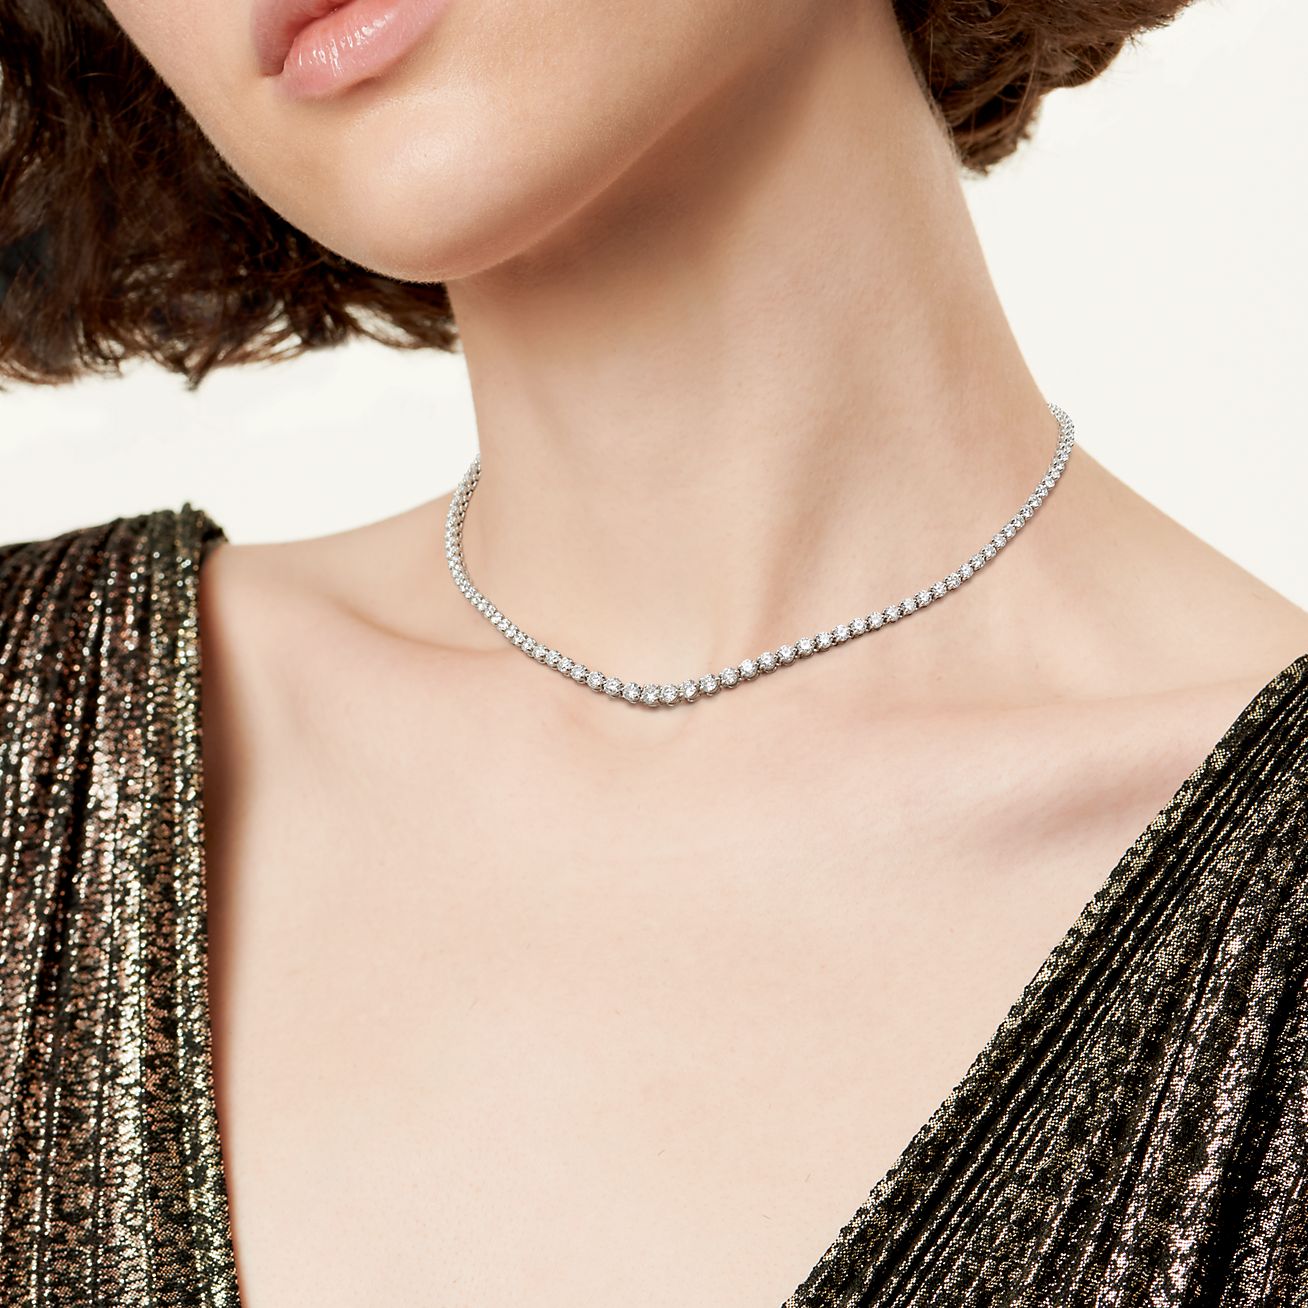 Tiffany HardWear graduated link necklace in 18k gold. | Tiffany & Co.